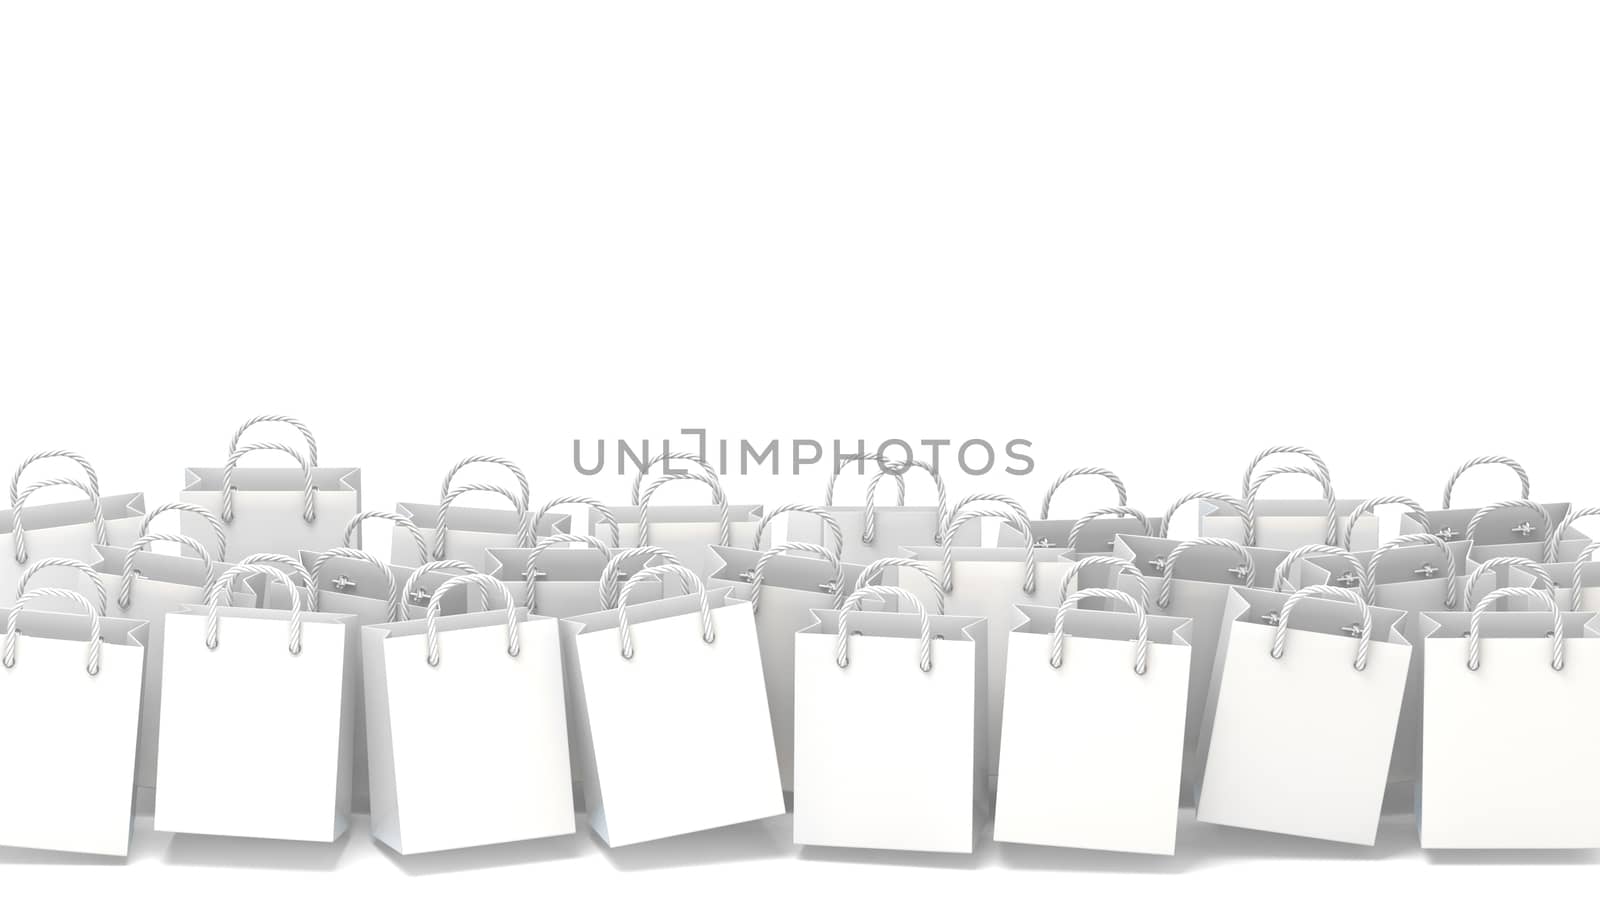 White blank shopping bags. 3D render illustration isolated on white background